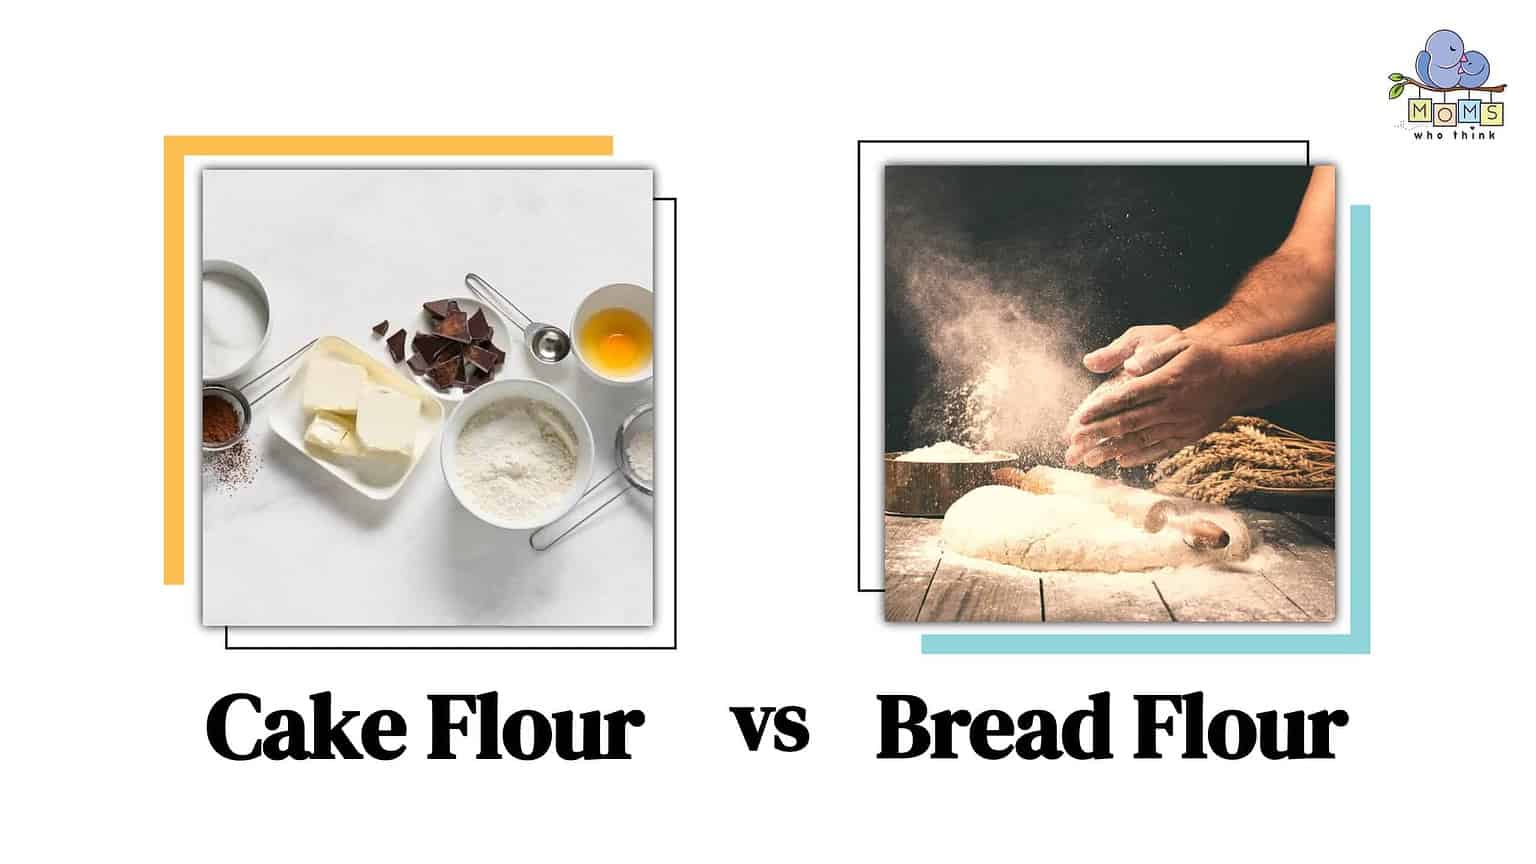 Self raising flour bread. An easy recipe for beginners! - My Greek Dish